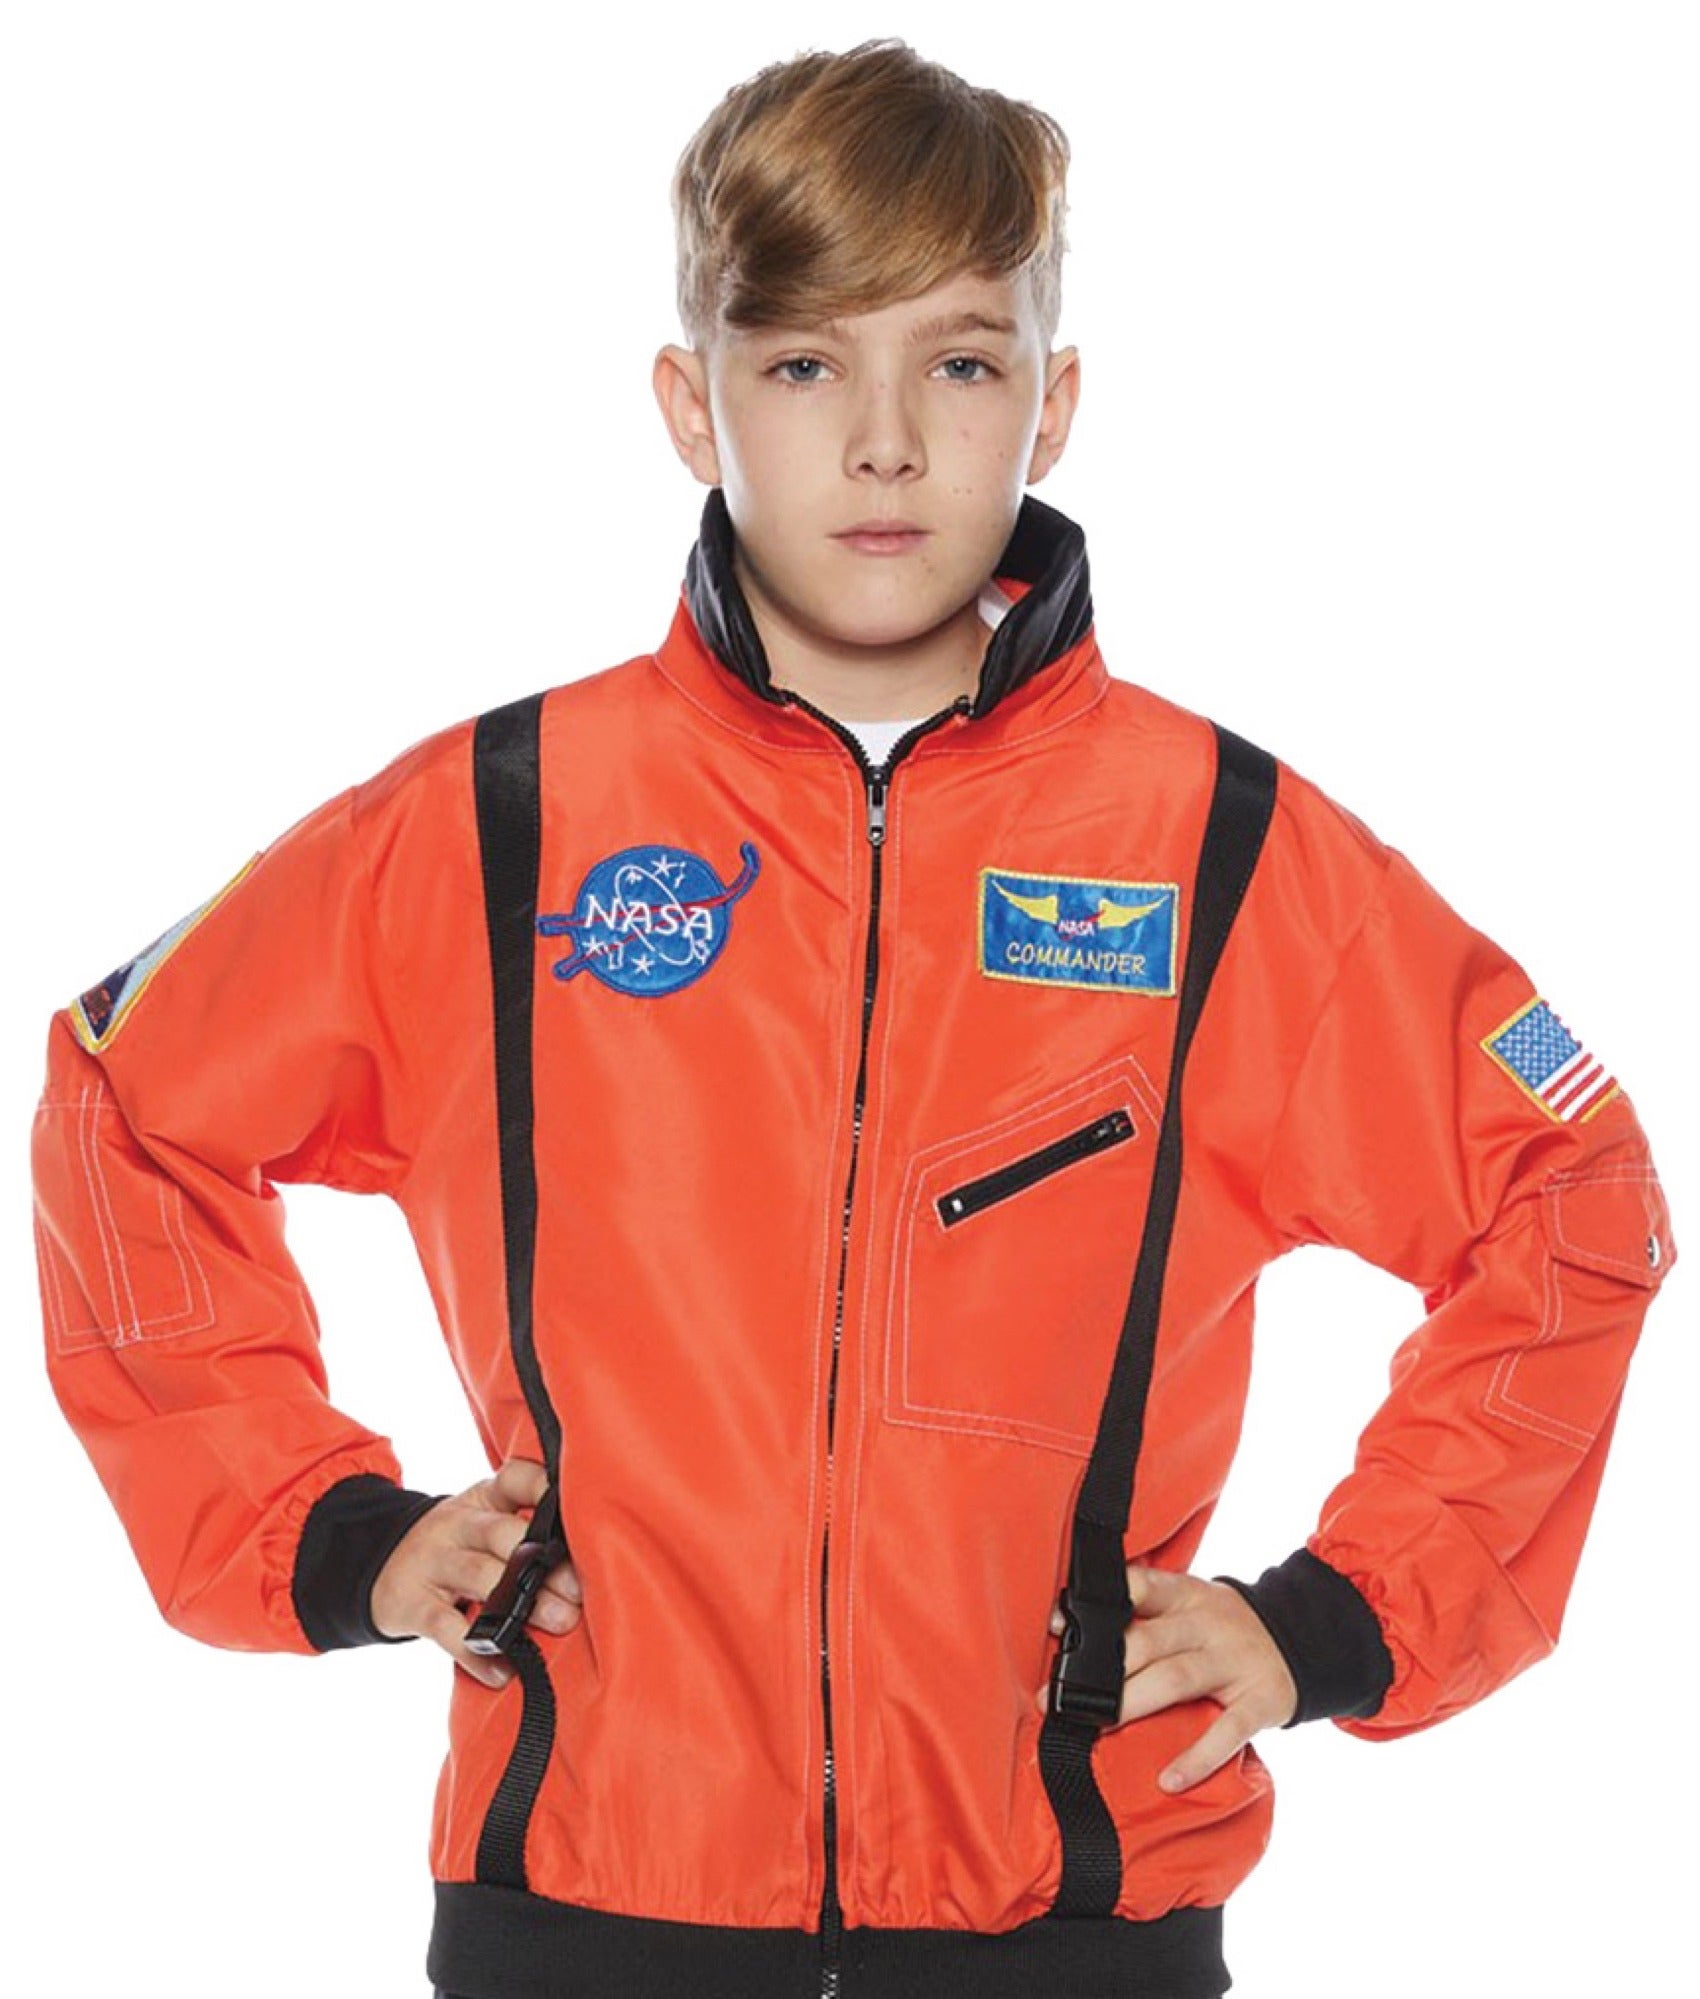 Hobbypos Astronaut Spaceman Space Orange Uniform Book Week Boys Costume Jacket